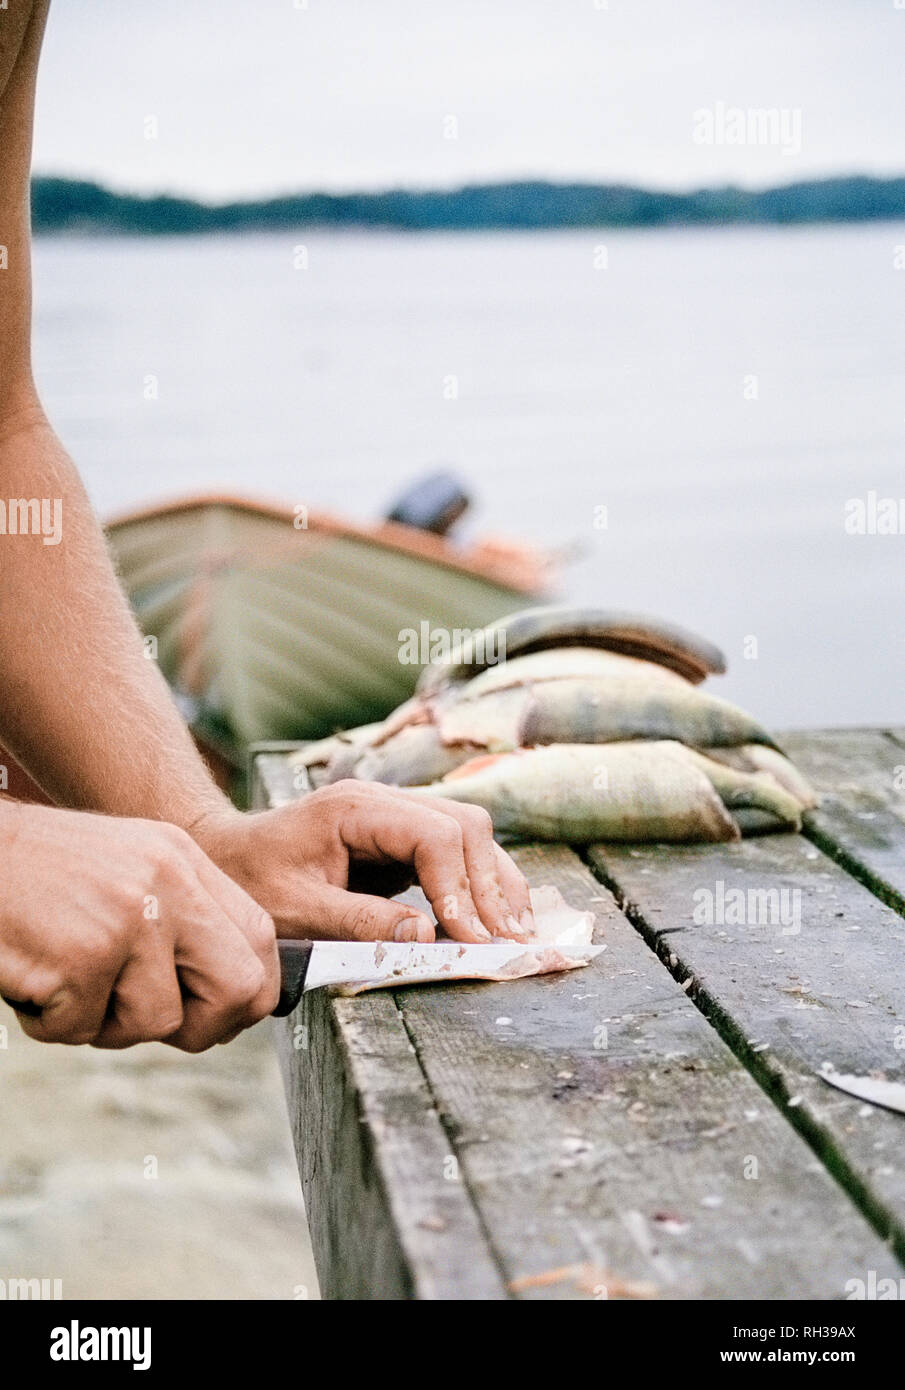 Man preparing fish, close-up Stock Photo